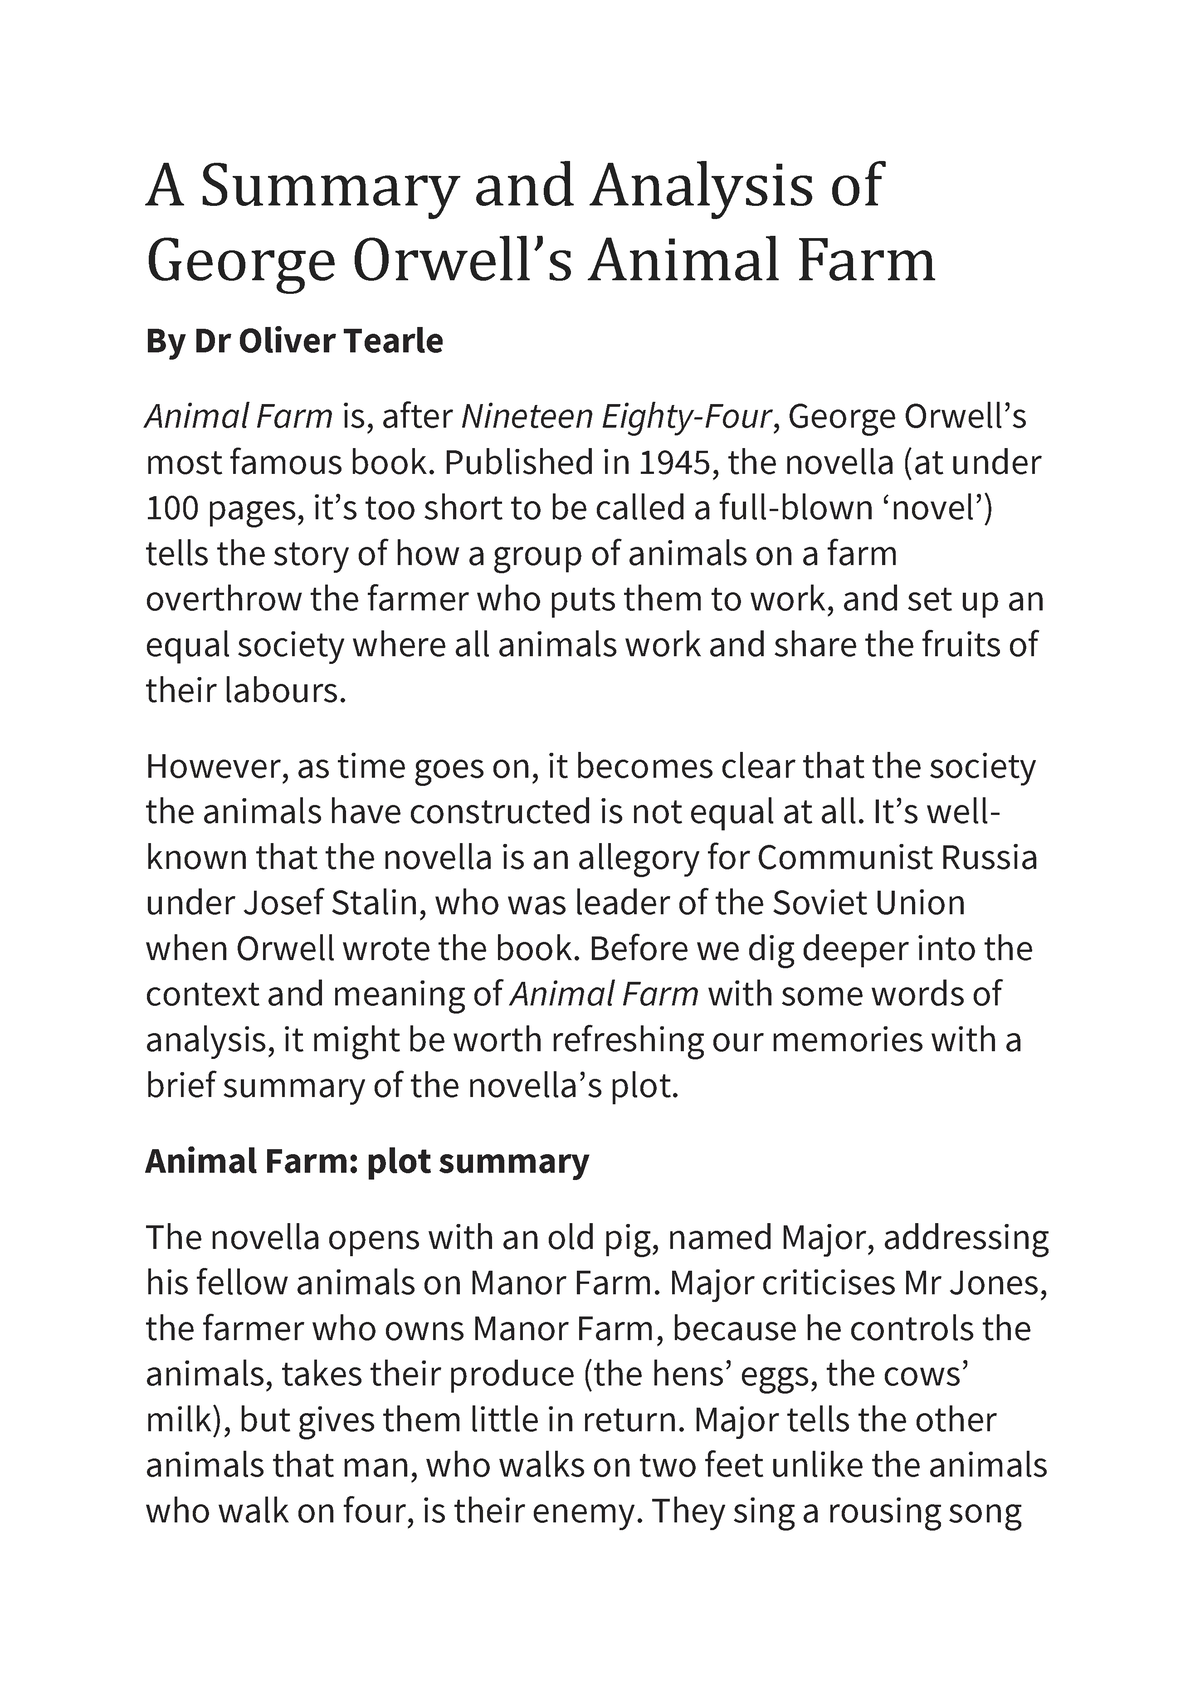 animal farm summary essay